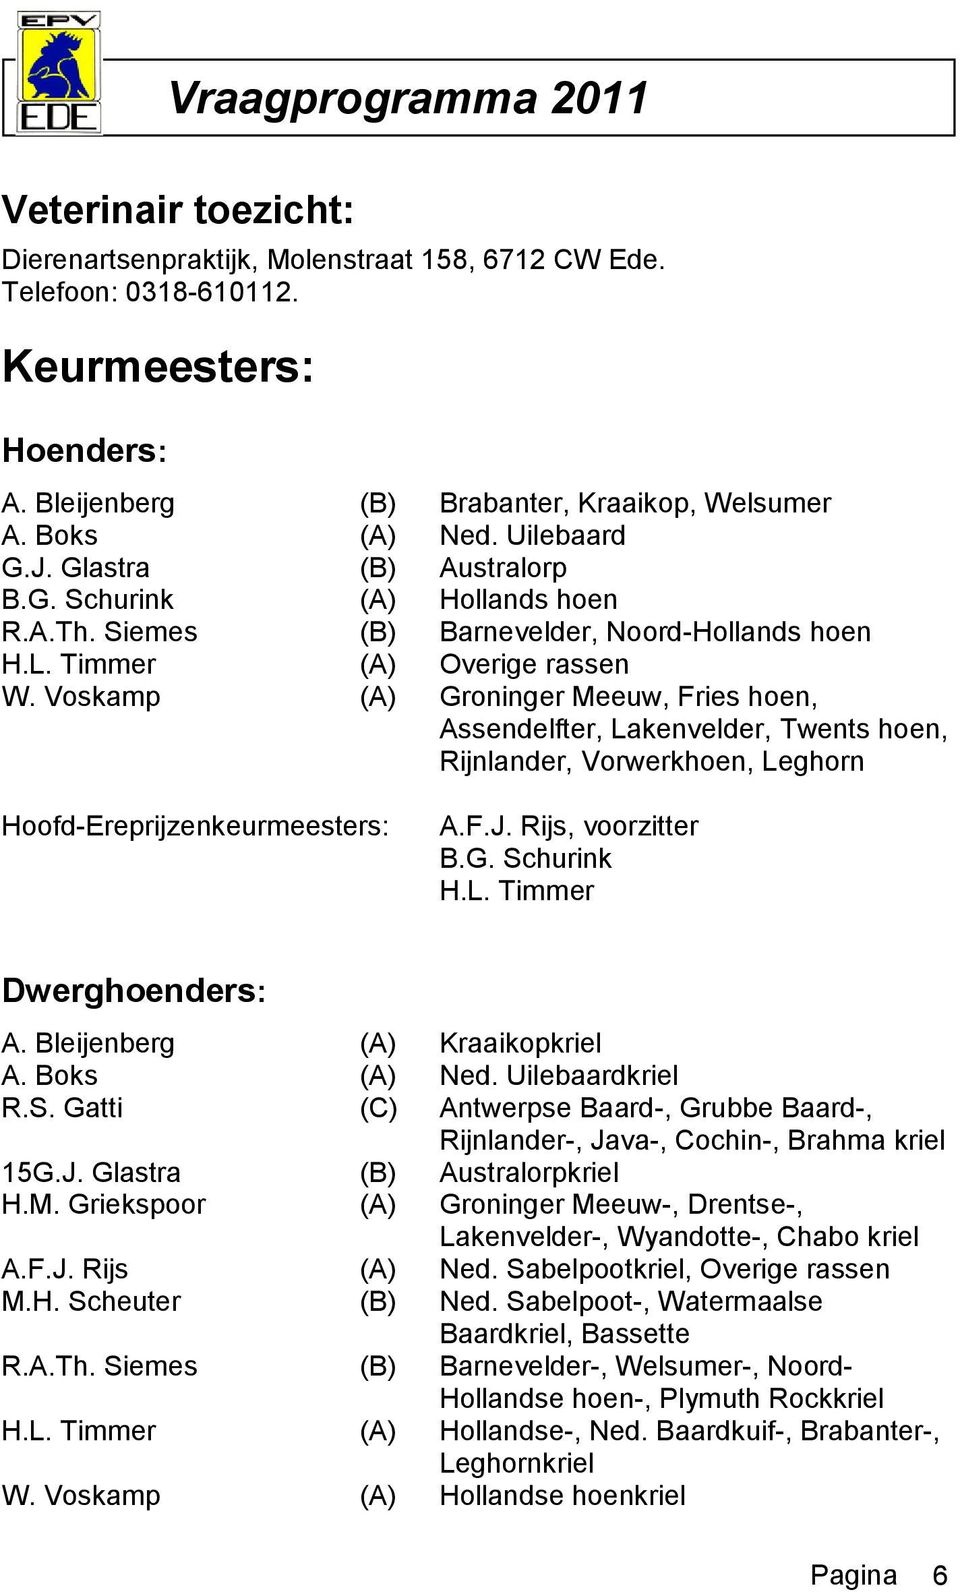 Voskamp (A) Groninger Meeuw, Fries hoen, Assendelfter, Lakenvelder, Twents hoen, Rijnlander, Vorwerkhoen, Leghorn Hoofd-Ereprijzenkeurmeesters: A.F.J. Rijs, voorzitter B.G. Schurink H.L. Timmer Dwerghoenders: A.